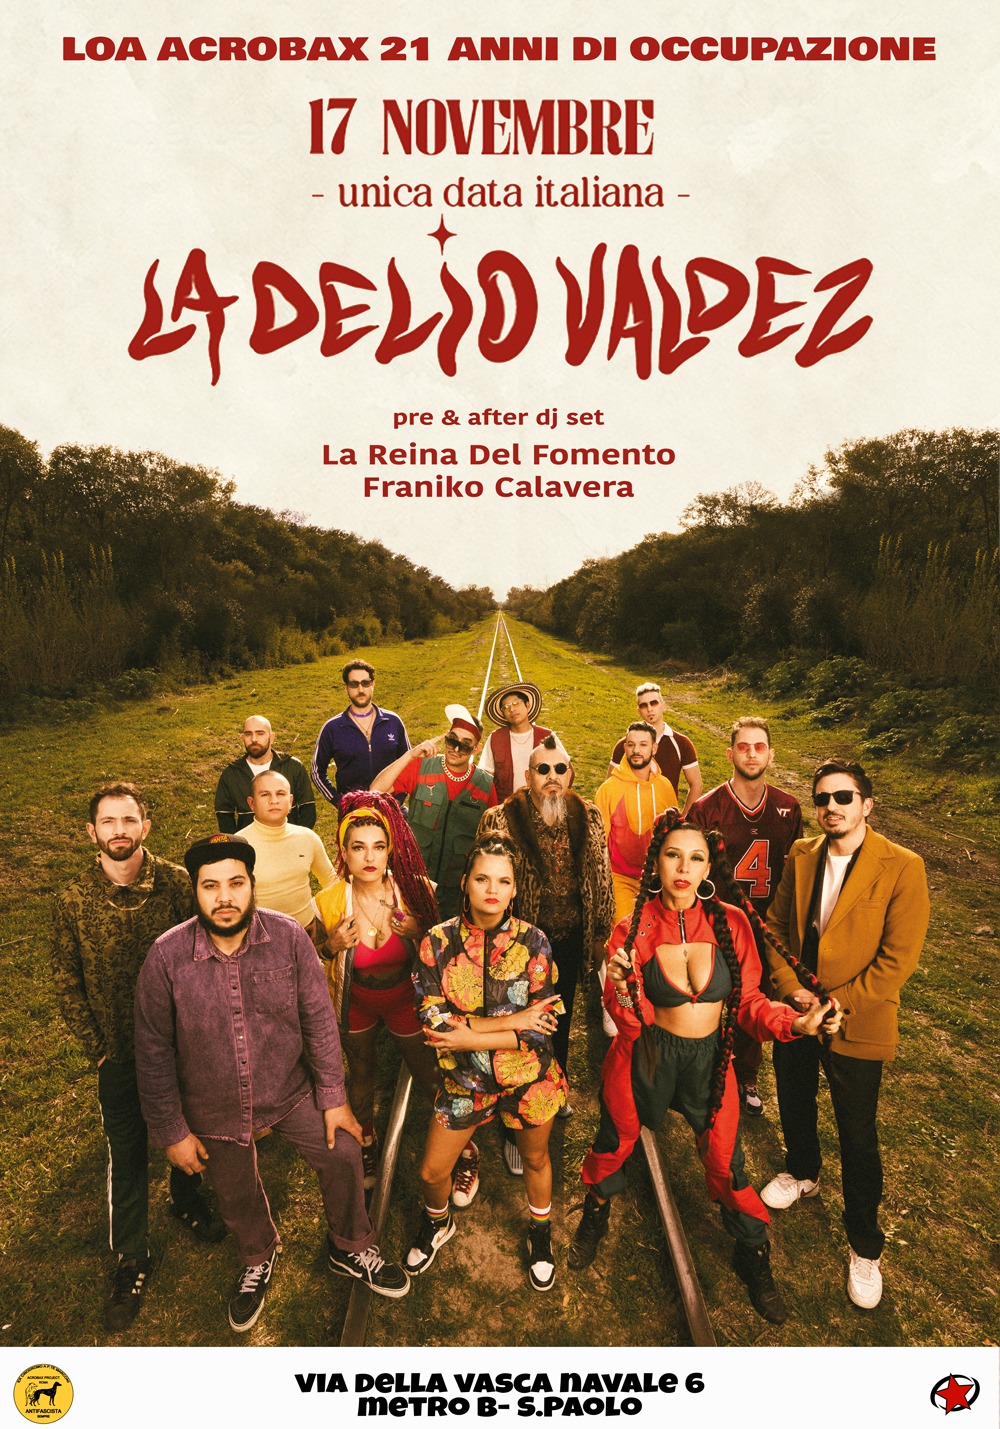 Venerdì 17 Novembre/ La Delio Valdez in concerto